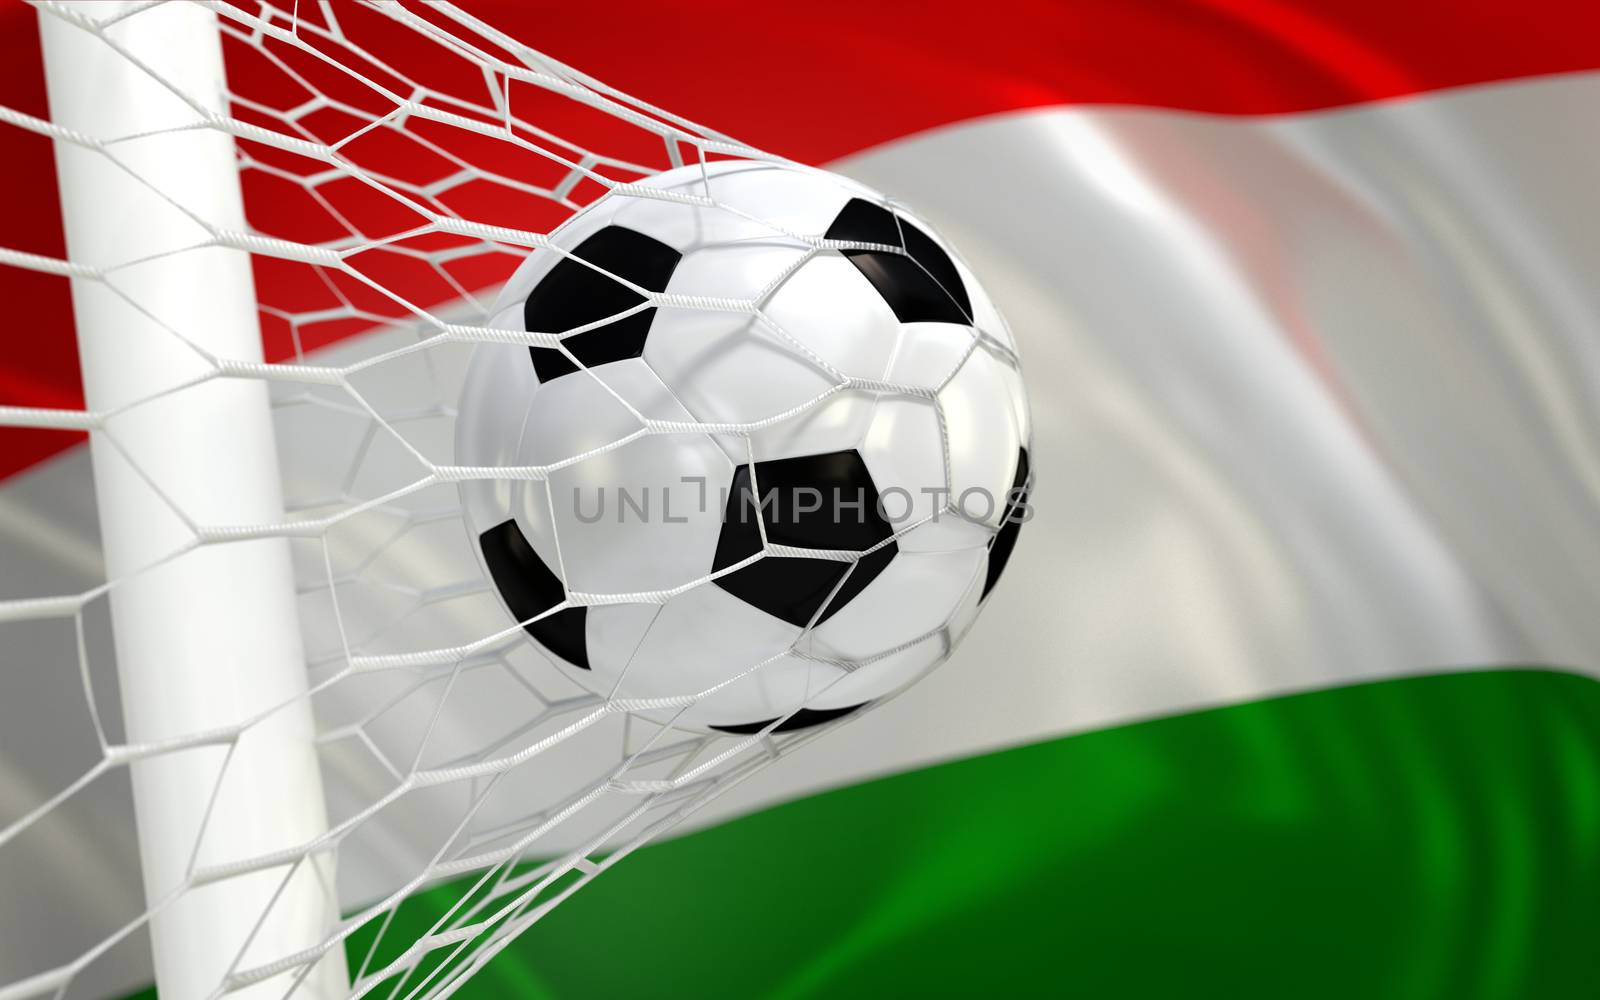 Hungary waving flag and soccer ball in goal net by Barbraford